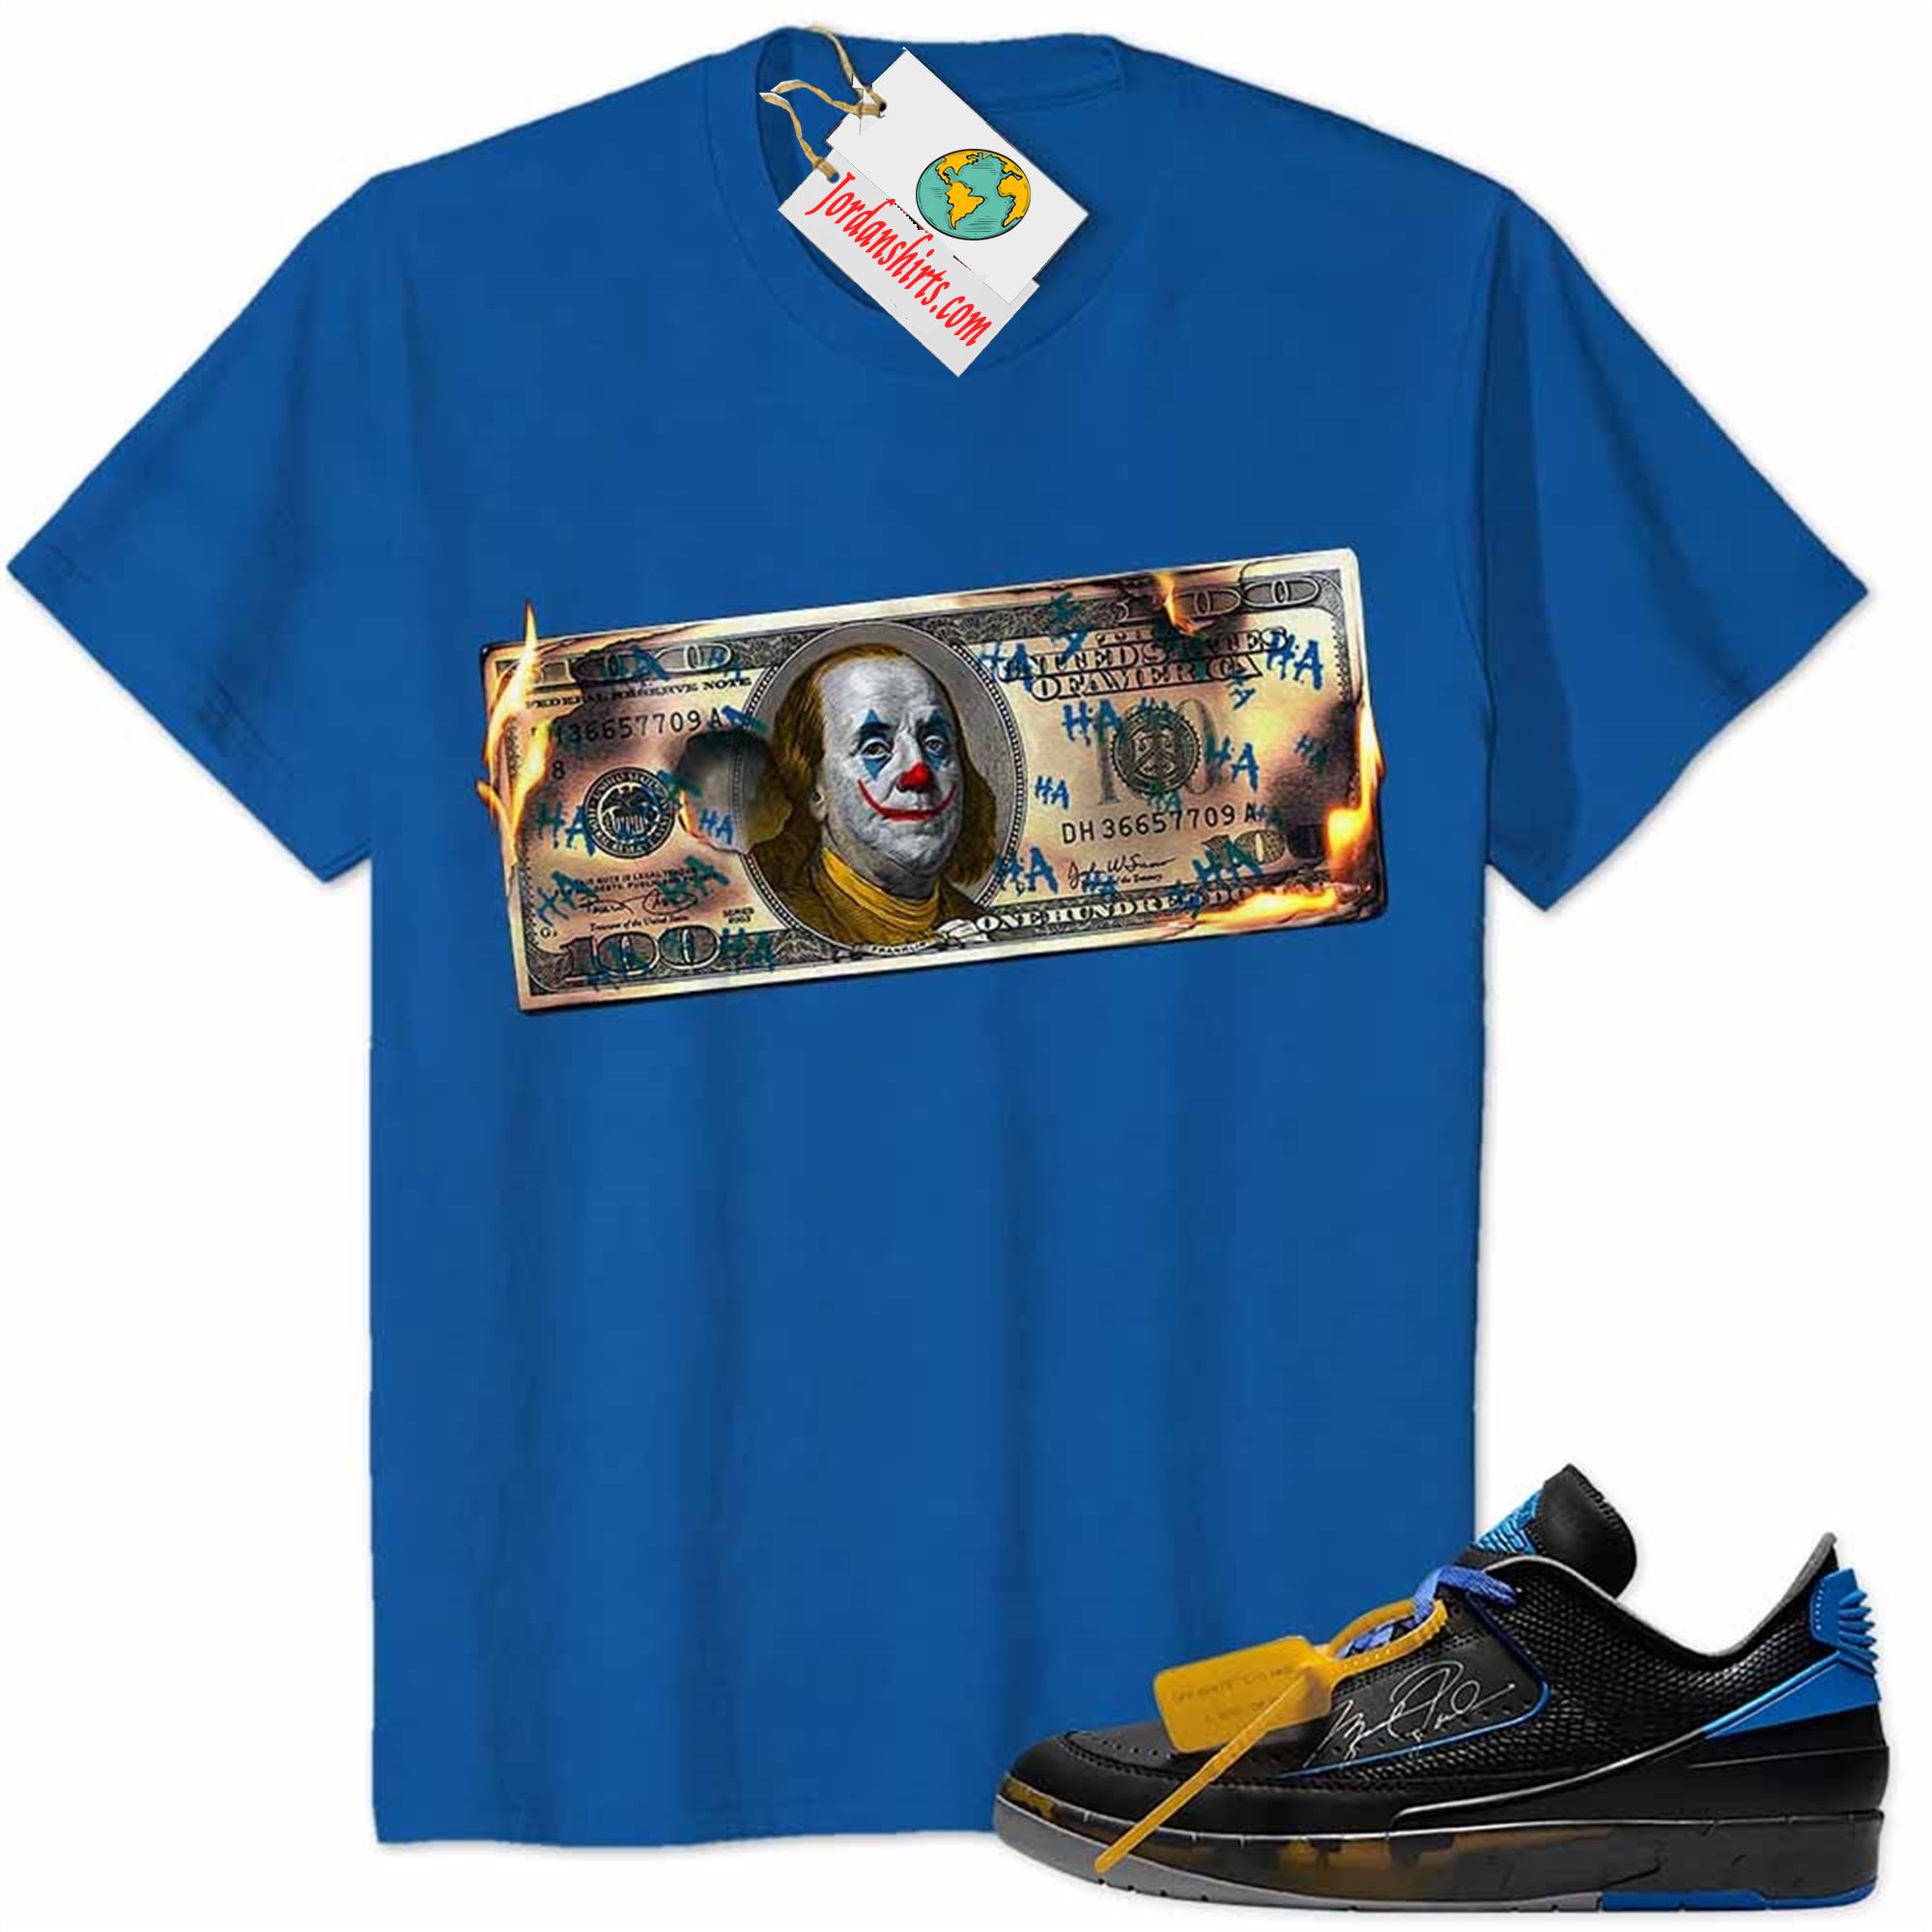 Jordan 2 Shirt, Ben Franklin Joker Dollar Burning Blue Air Jordan 2 Low X Off-white Black And Varsity Royal 2s Size Up To 5xl